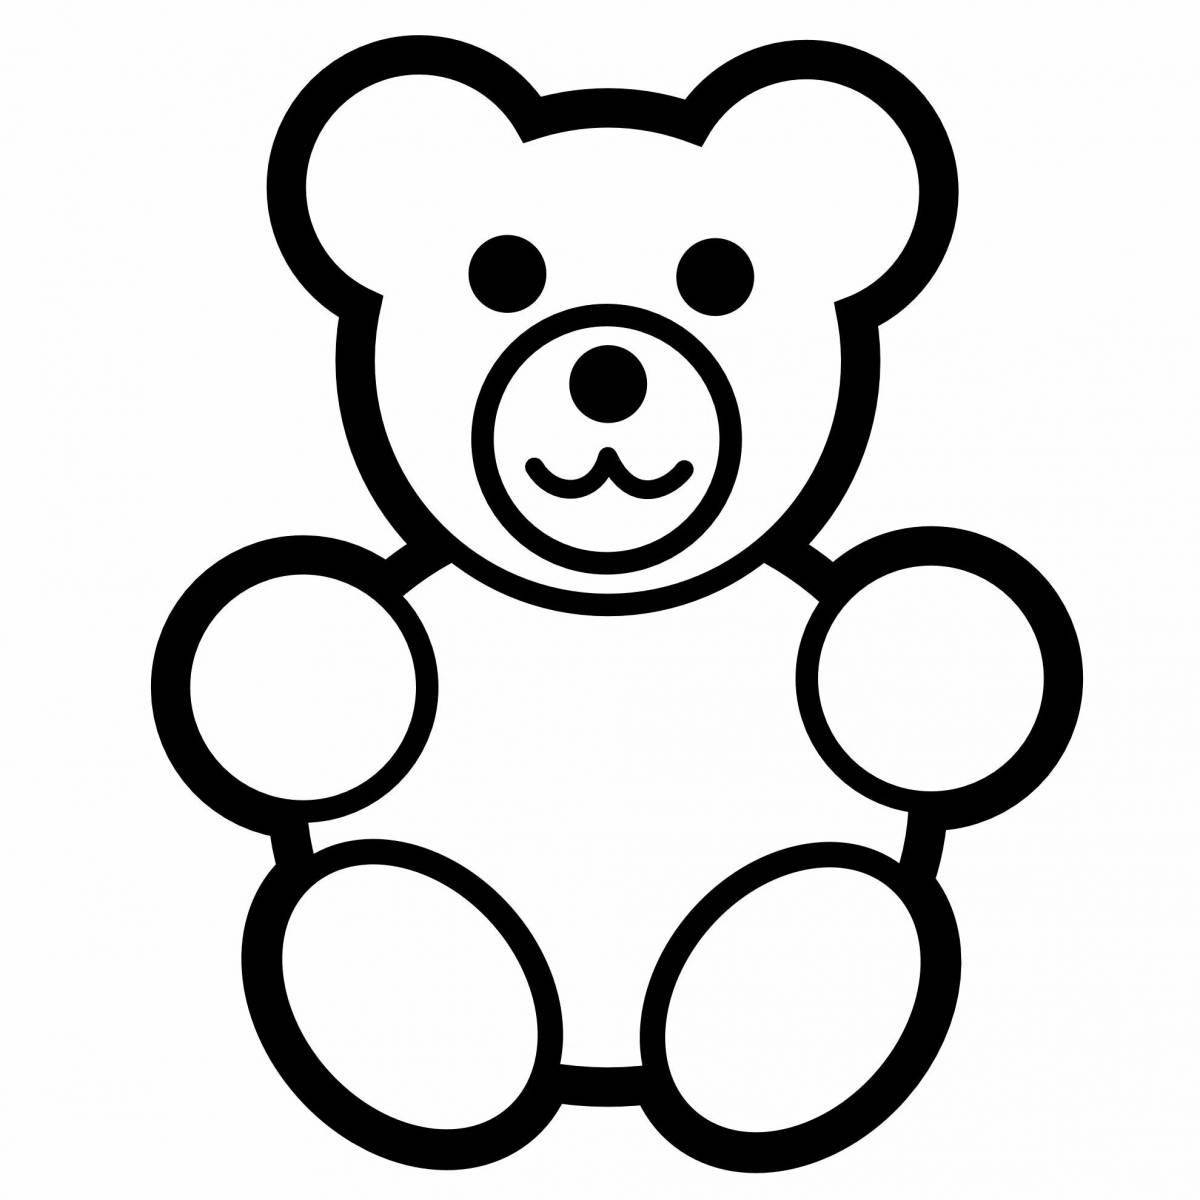 Coloring book joyful teddy bear for children 5-6 years old